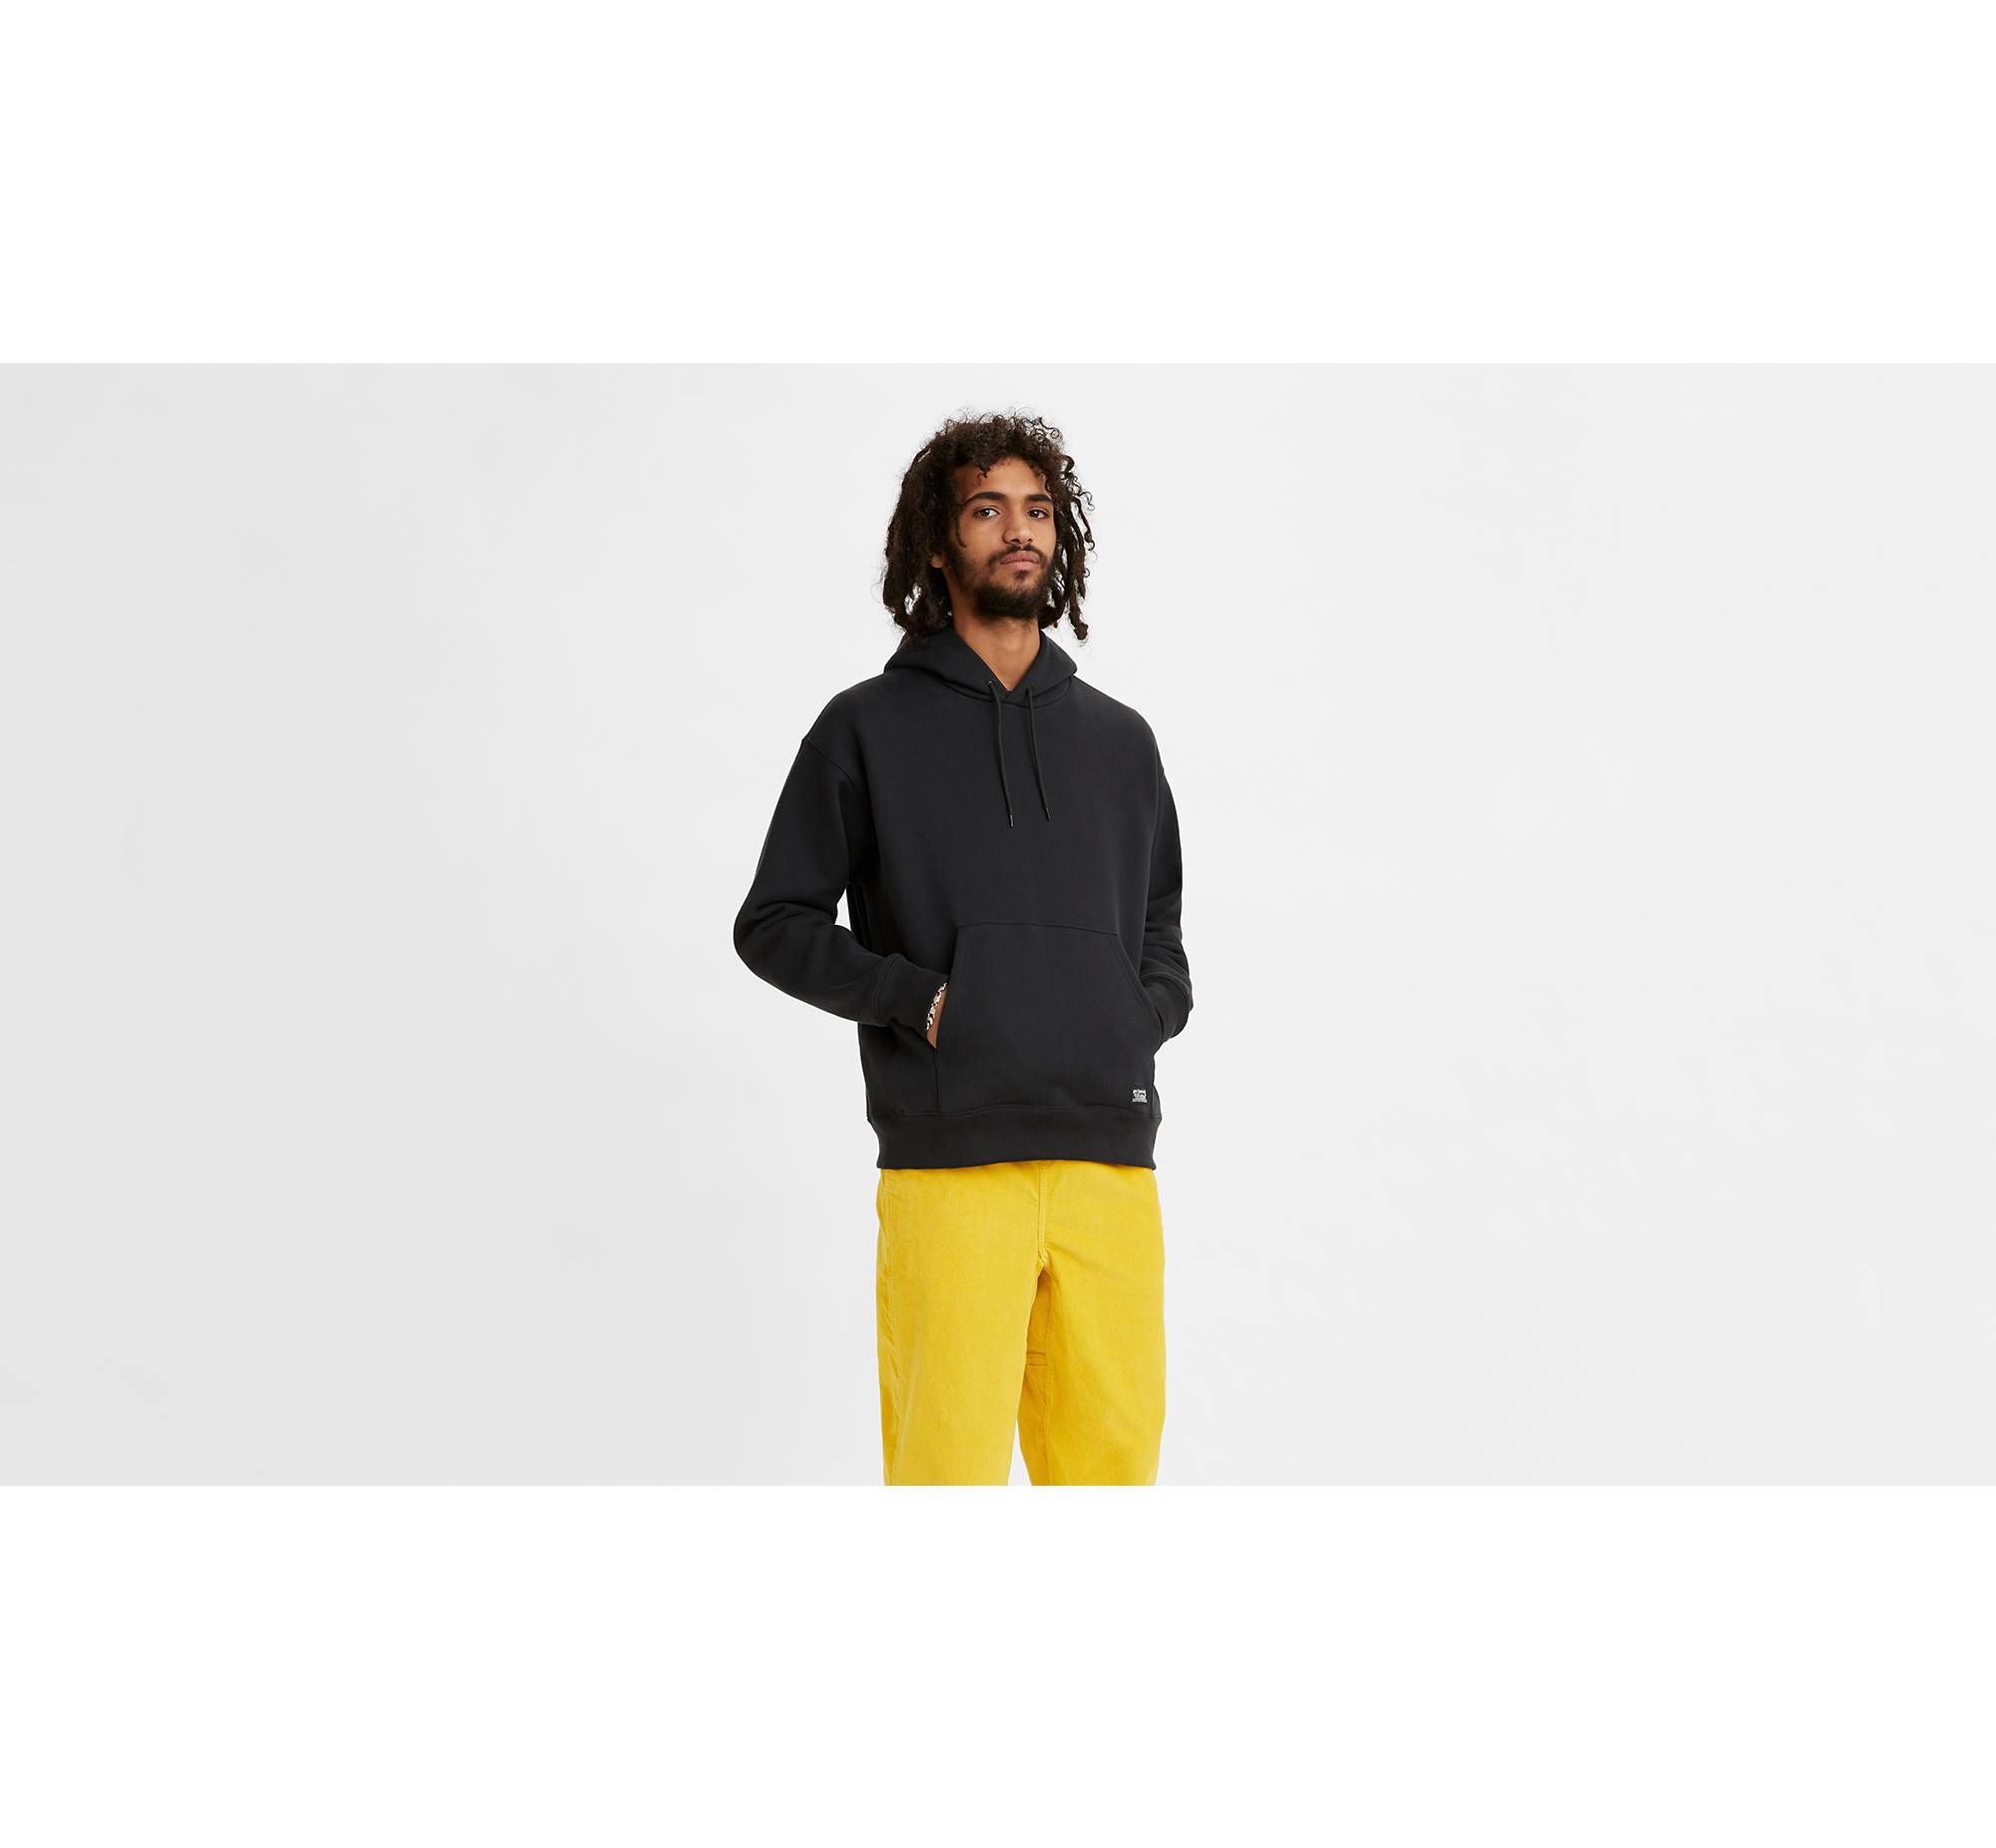 Supreme -Louis Vuitton - All Over Hoodie & Sweatshirt